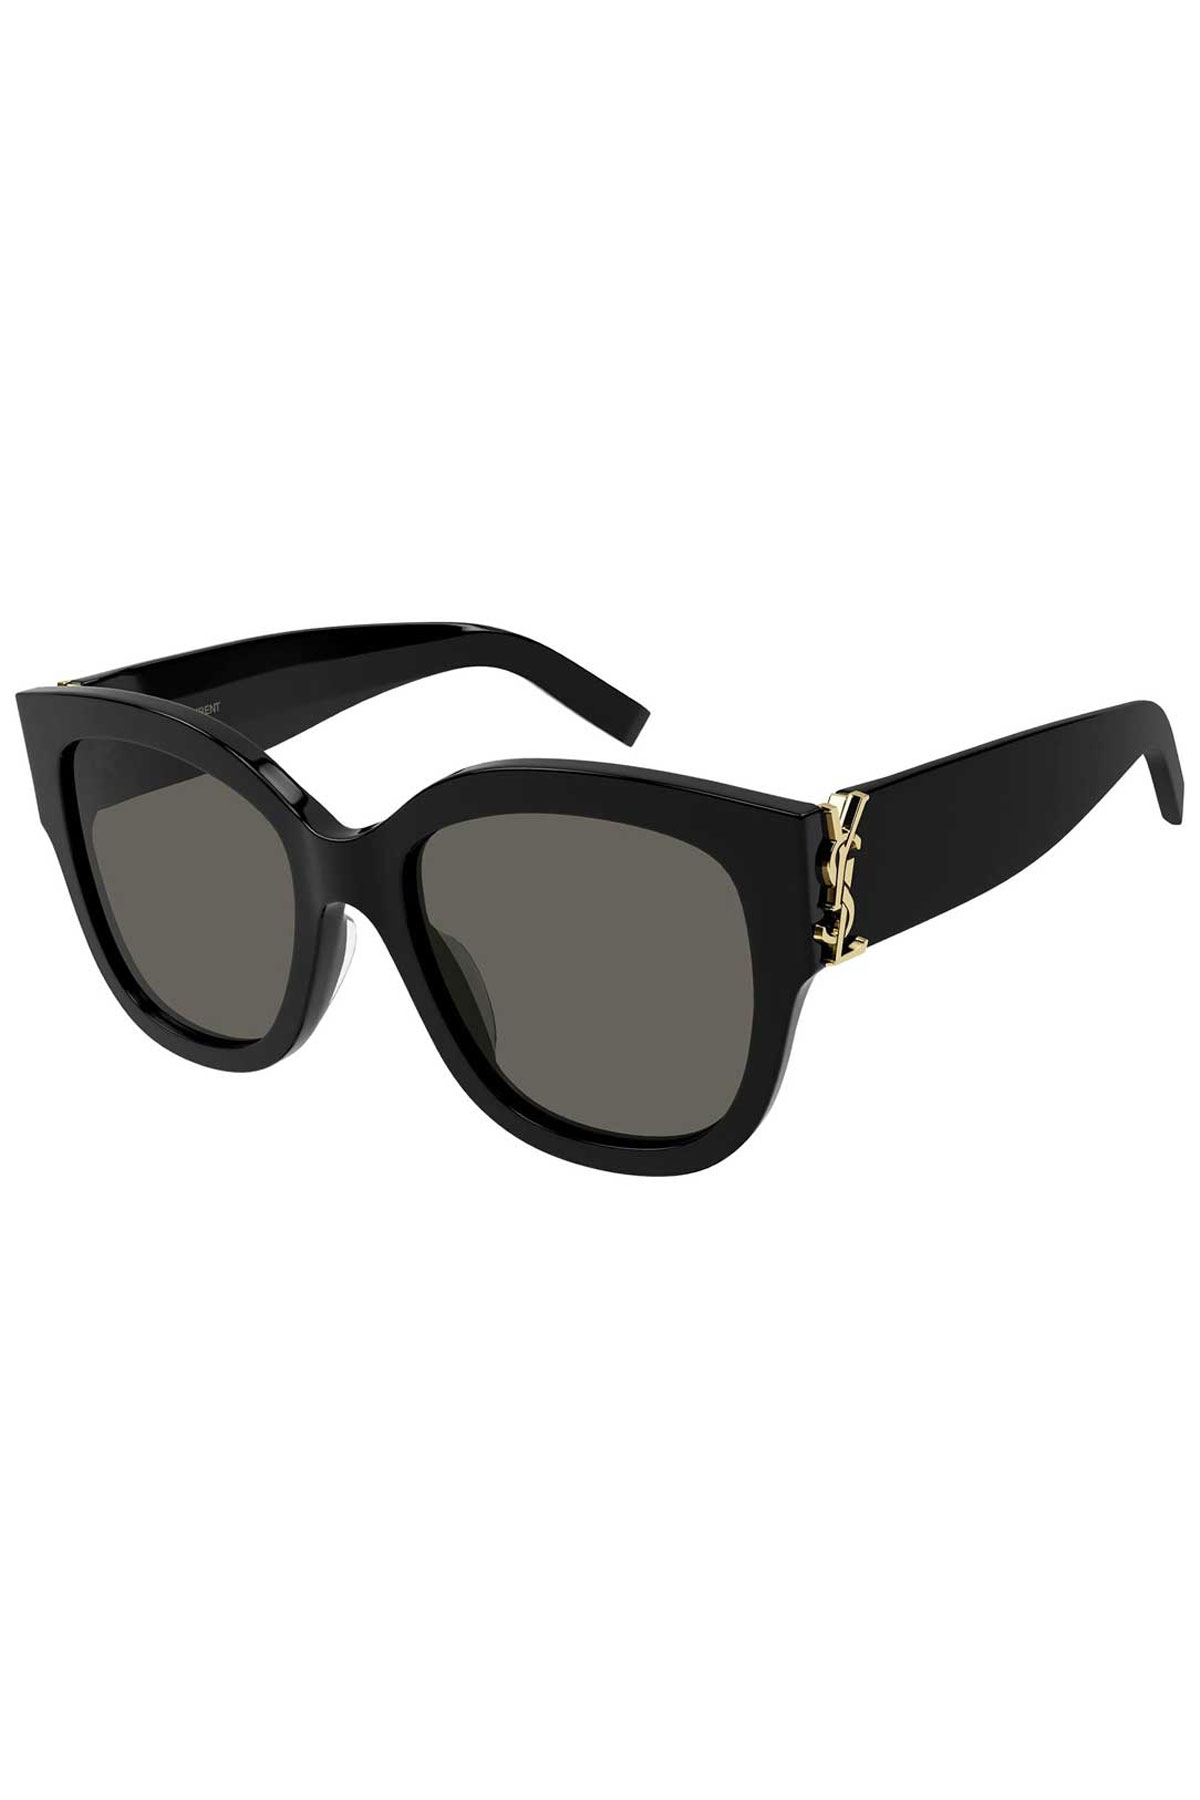 Saint Laurent SL M95/F 001 Shiny Black Sunglasses